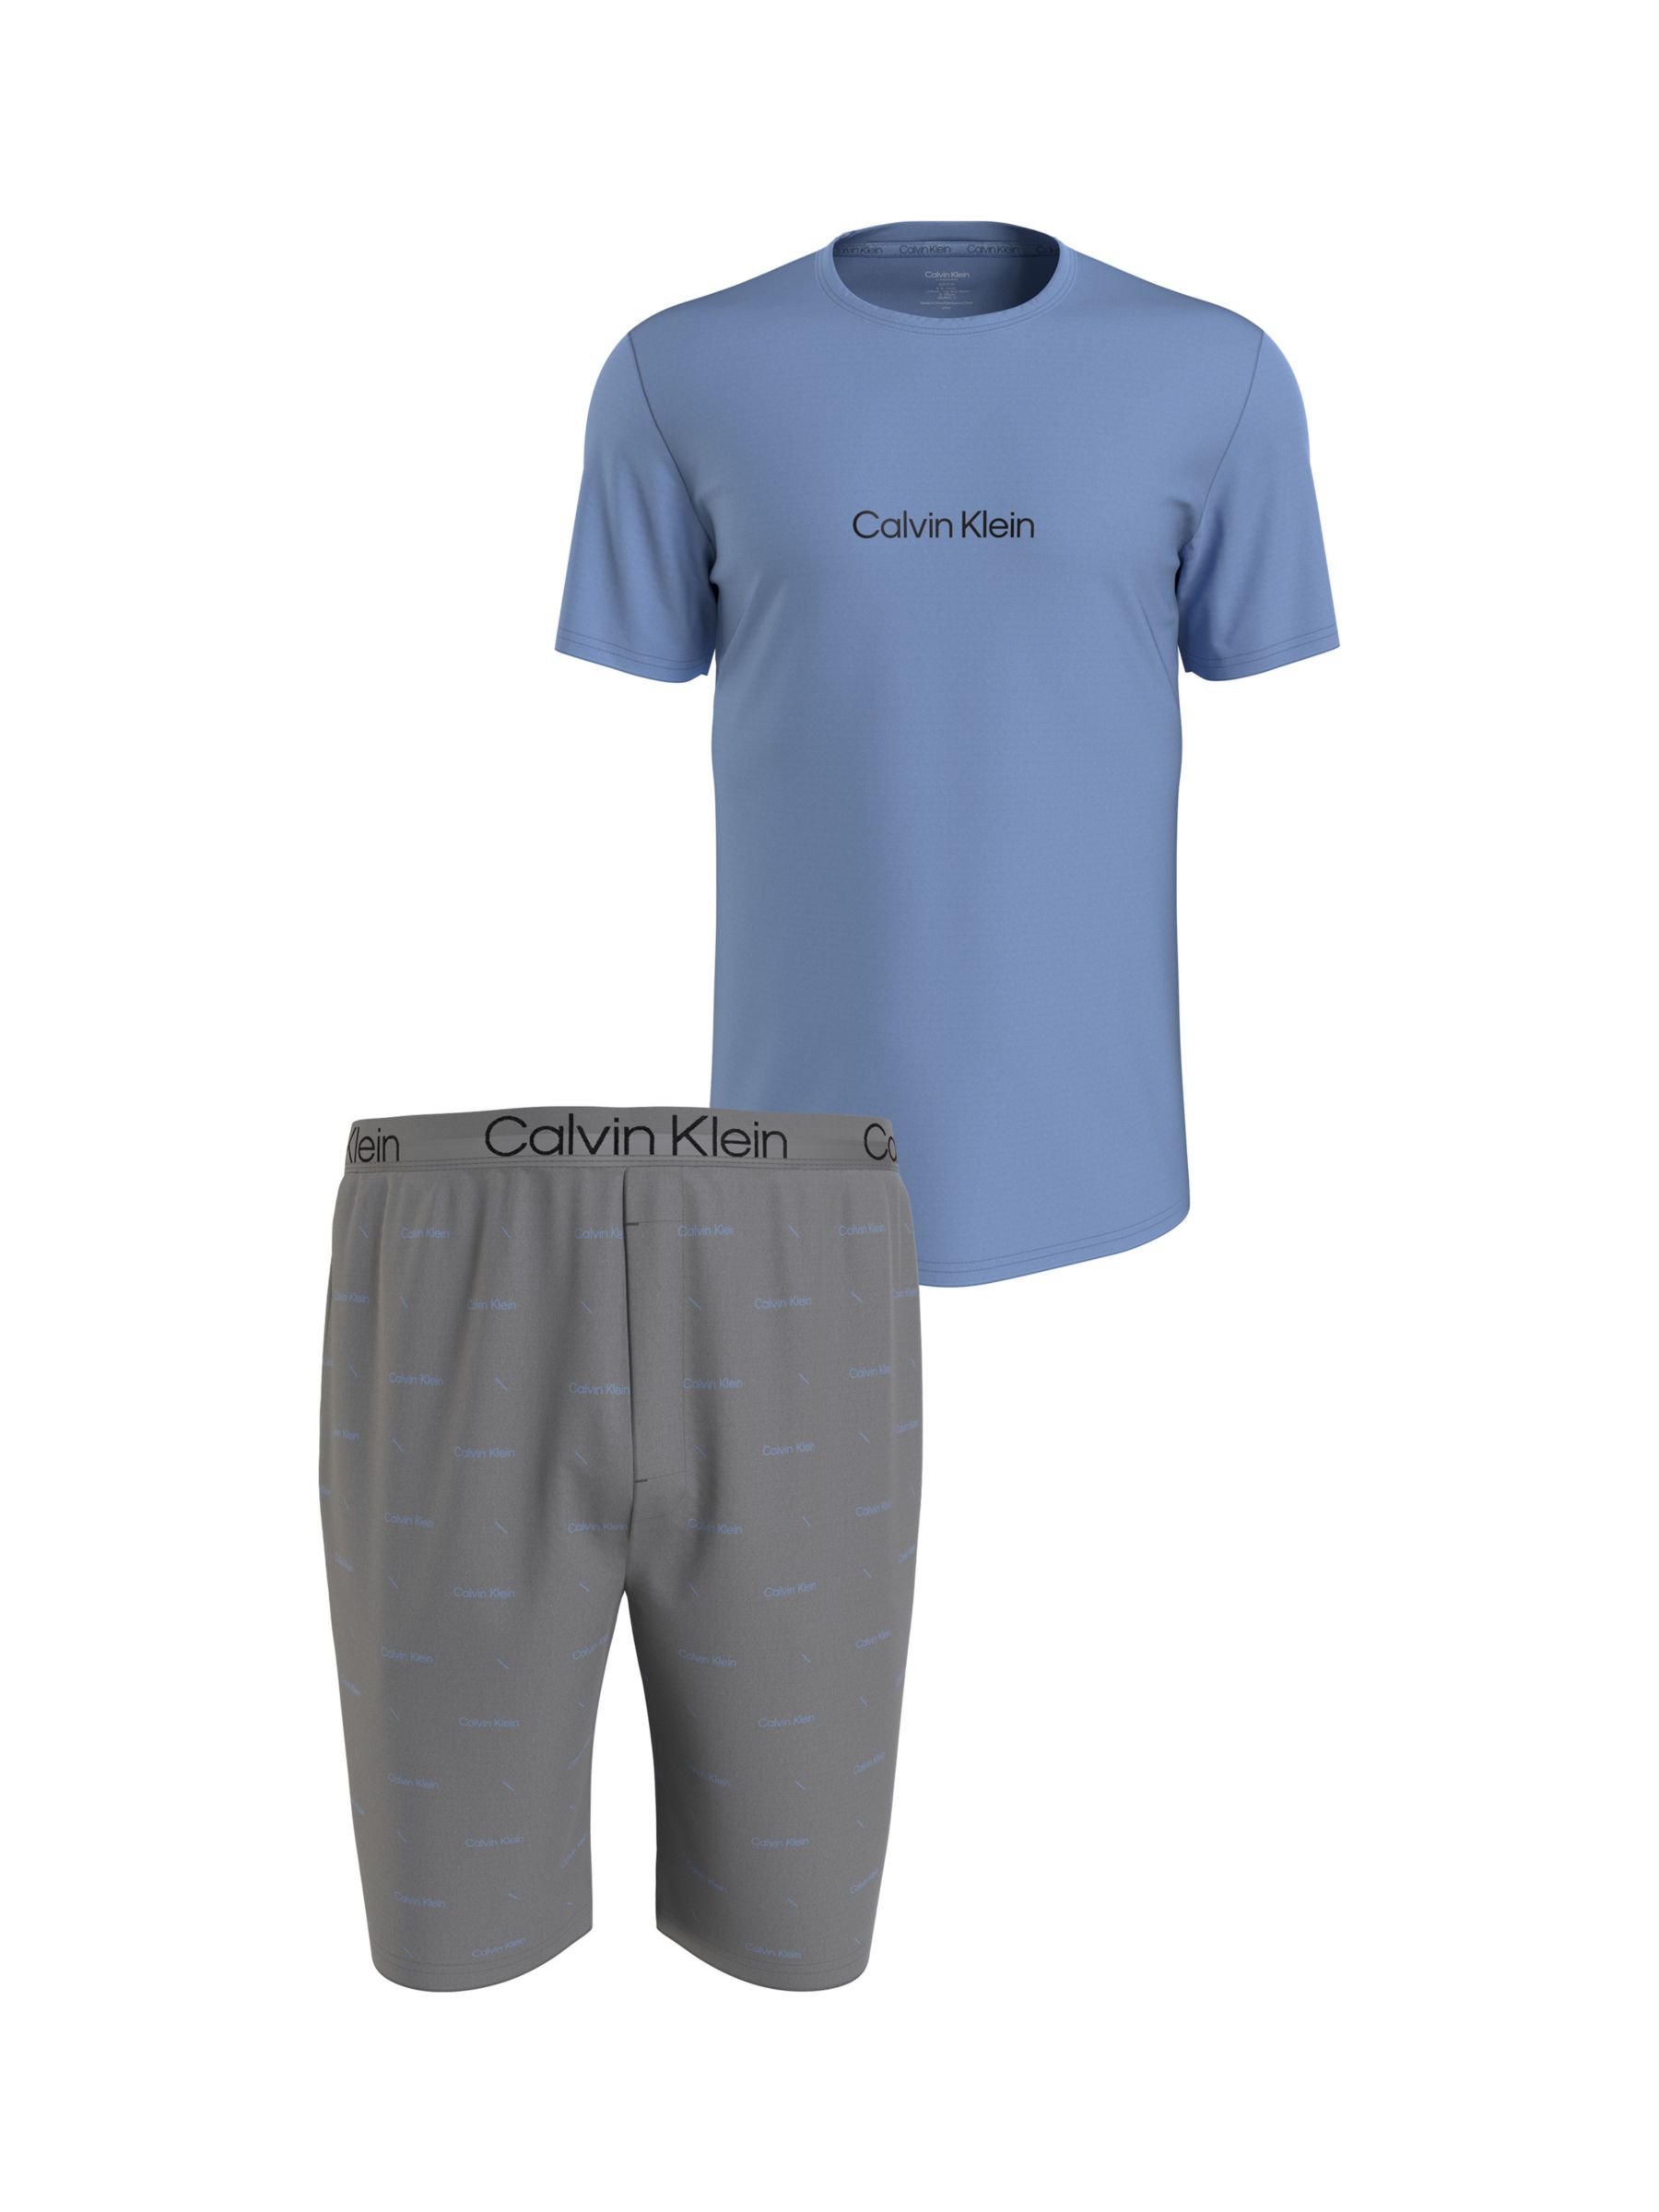 Calvin Klein Slogan Lounge Top & Shorts Set, Blue/Grey, S